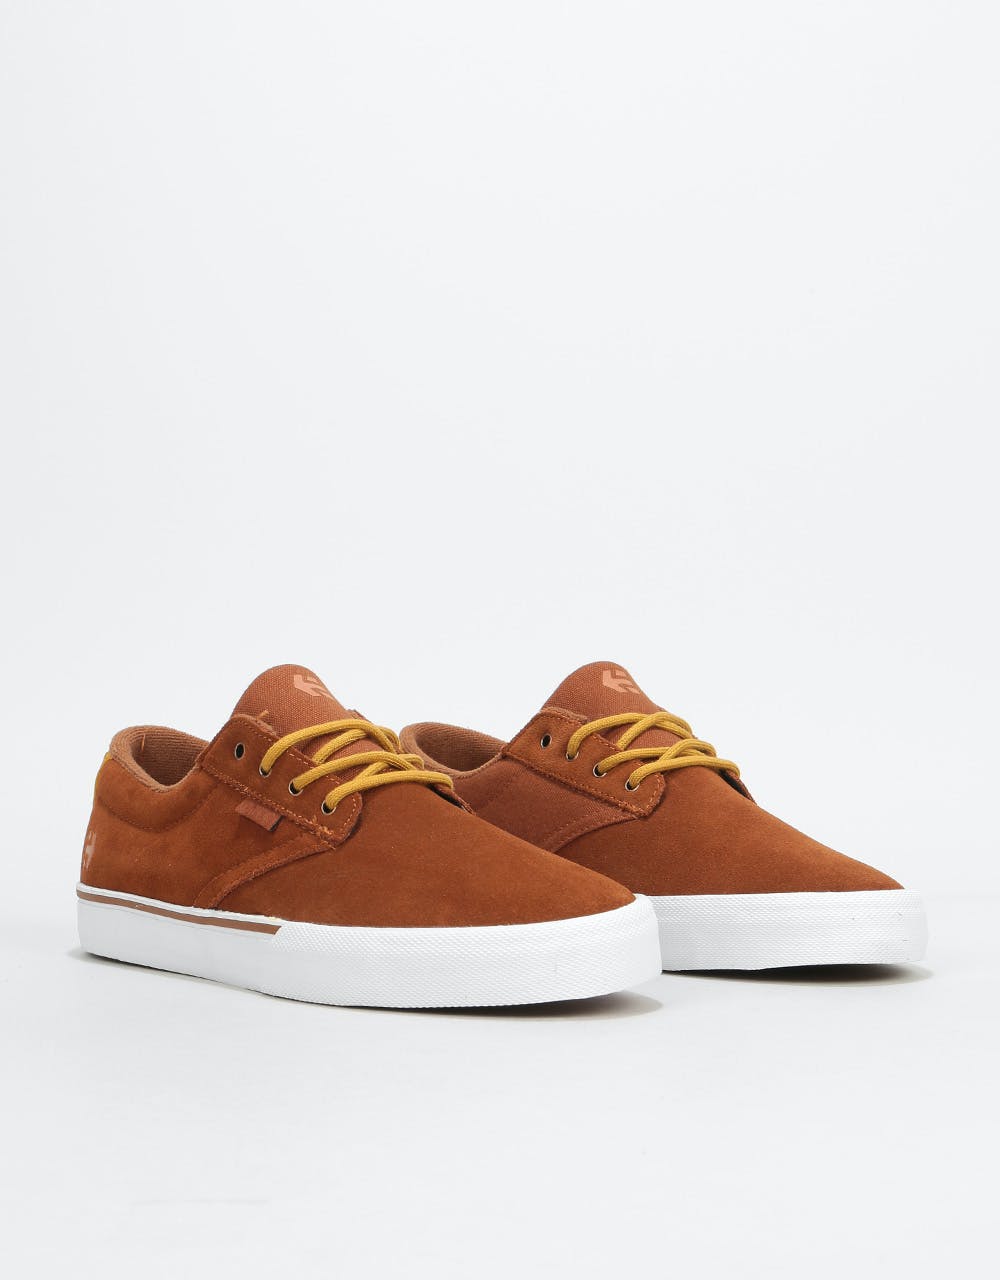 Etnies Jameson Vulc Skate Shoes - Brown/Tan